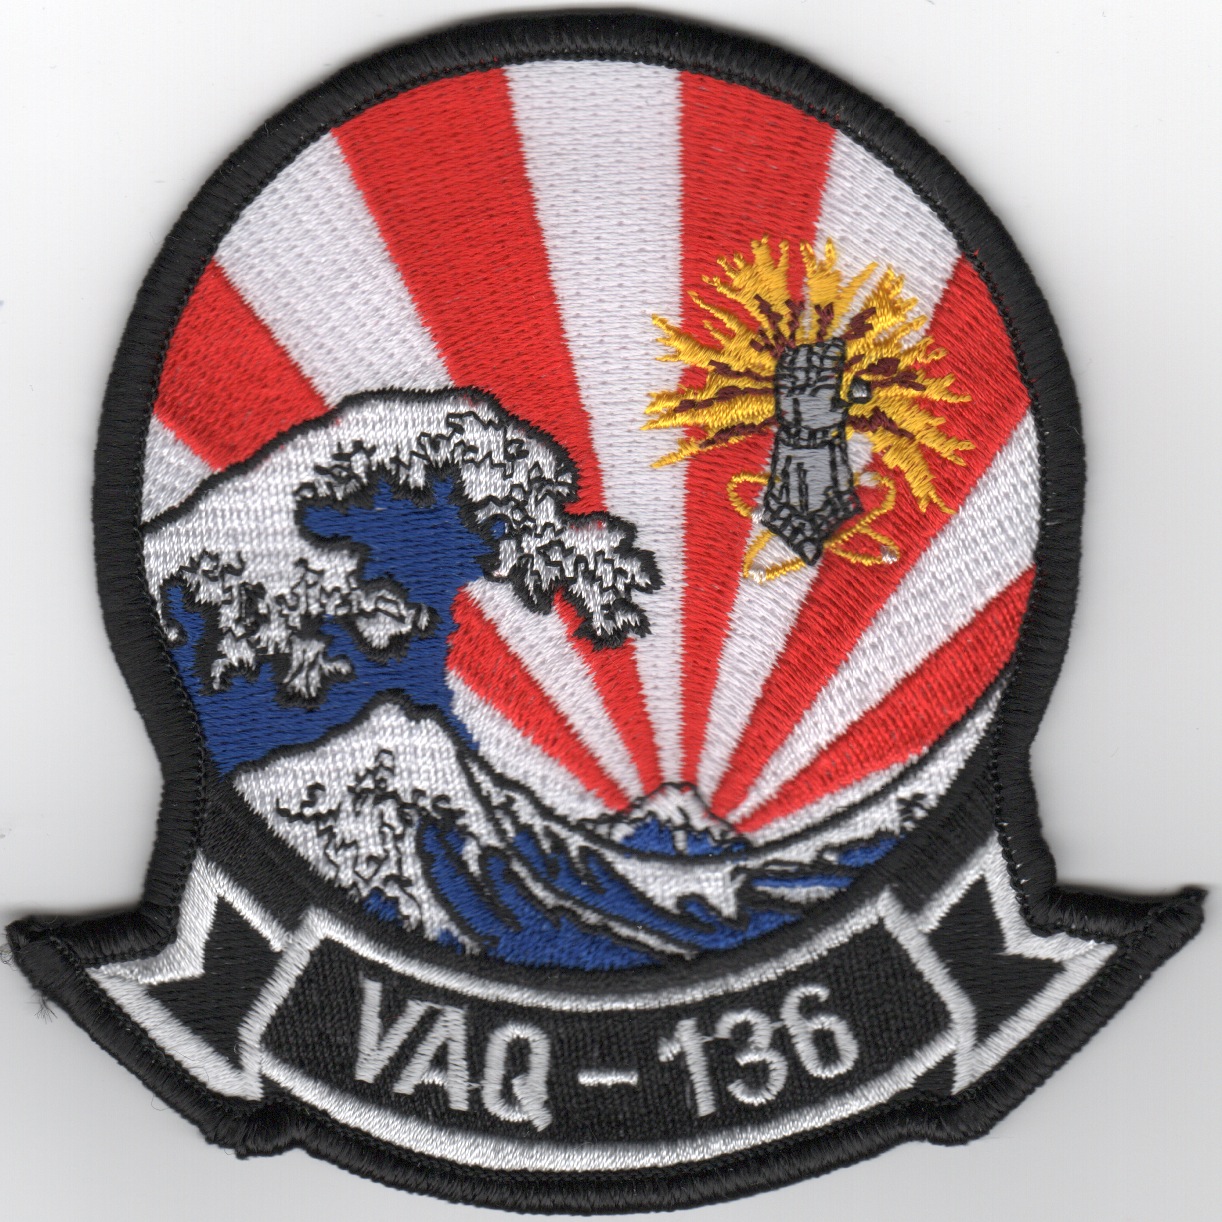 VAQ-136 *TIDAL WAVE* Squadron Patch